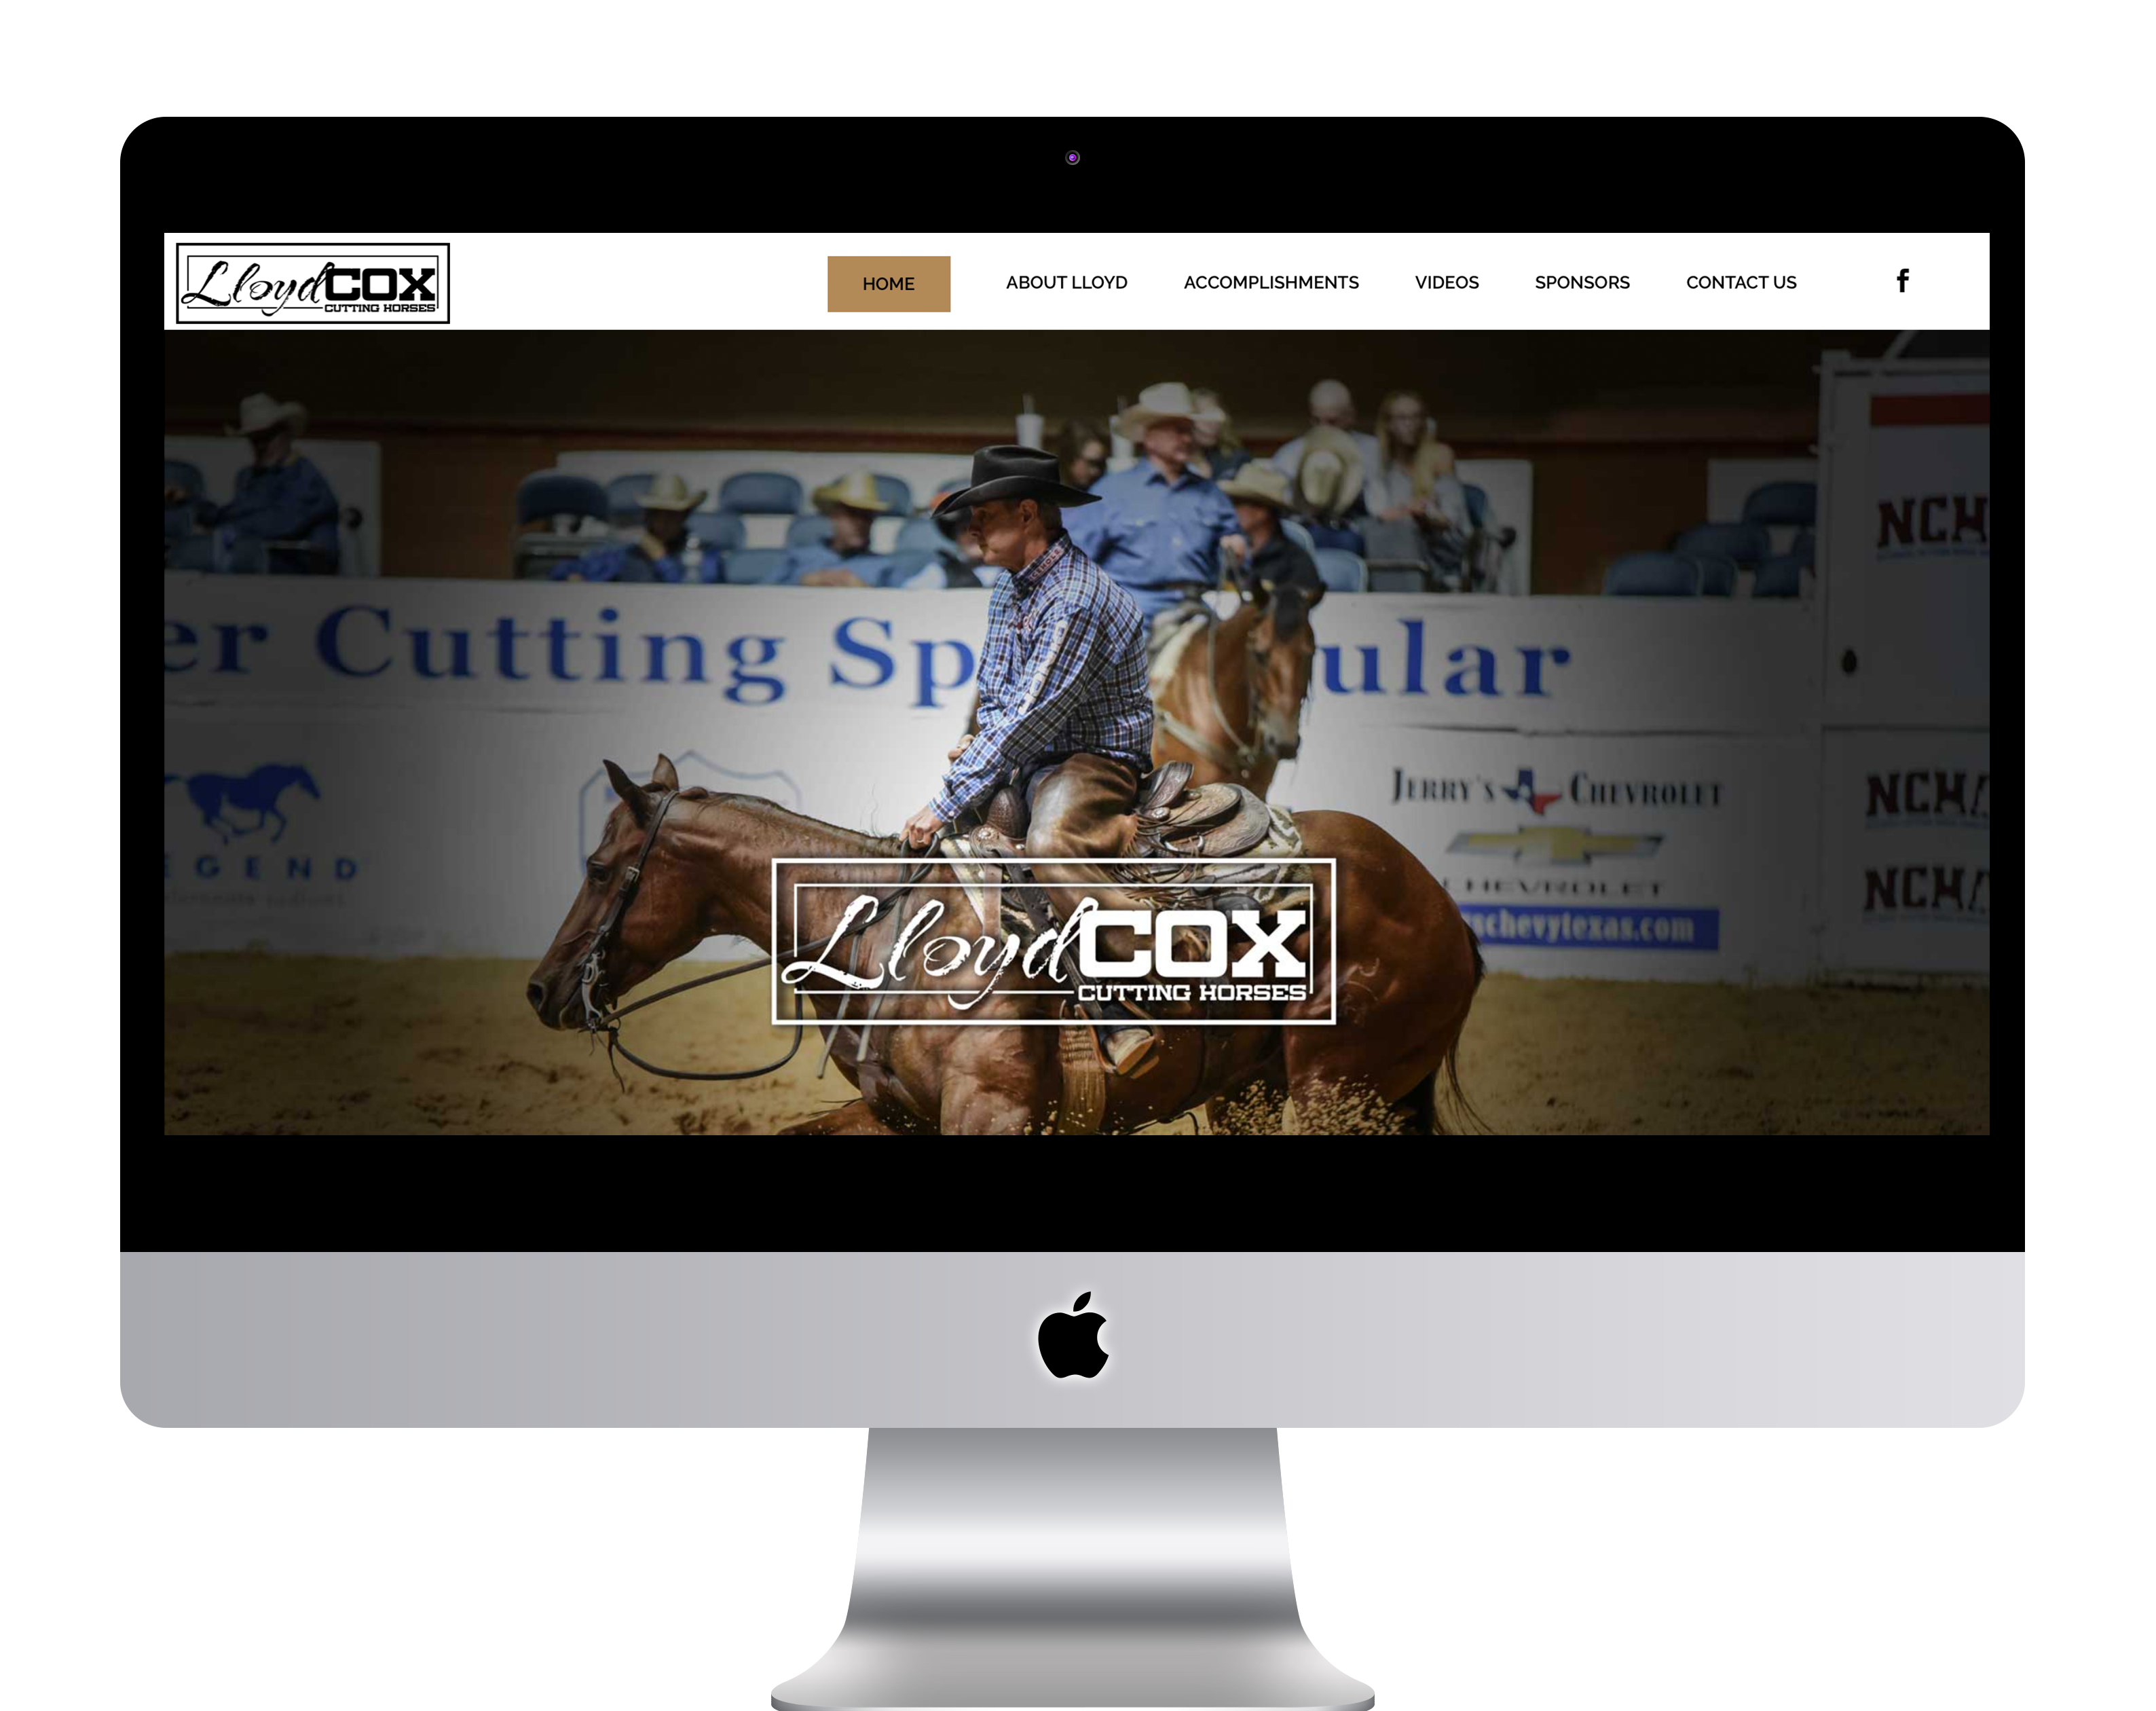 Lloyd Cox cutting horses hoe website design